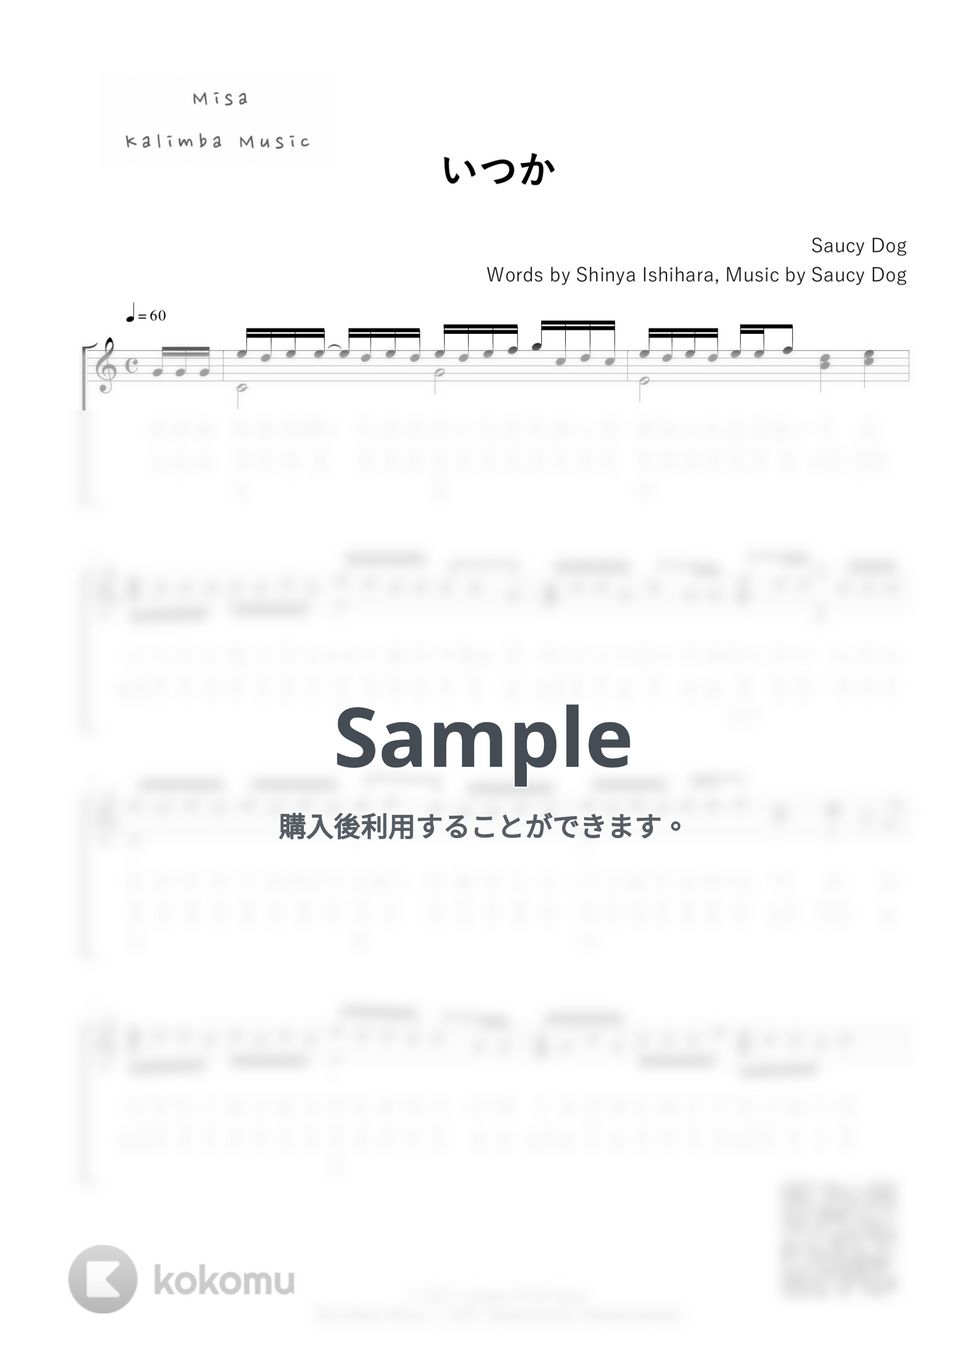 Saucy Dog - いつか / 17音カリンバ / 数字音名表記 (歌詞付き/ 模範演奏付き) by Misa / Kalimba Music